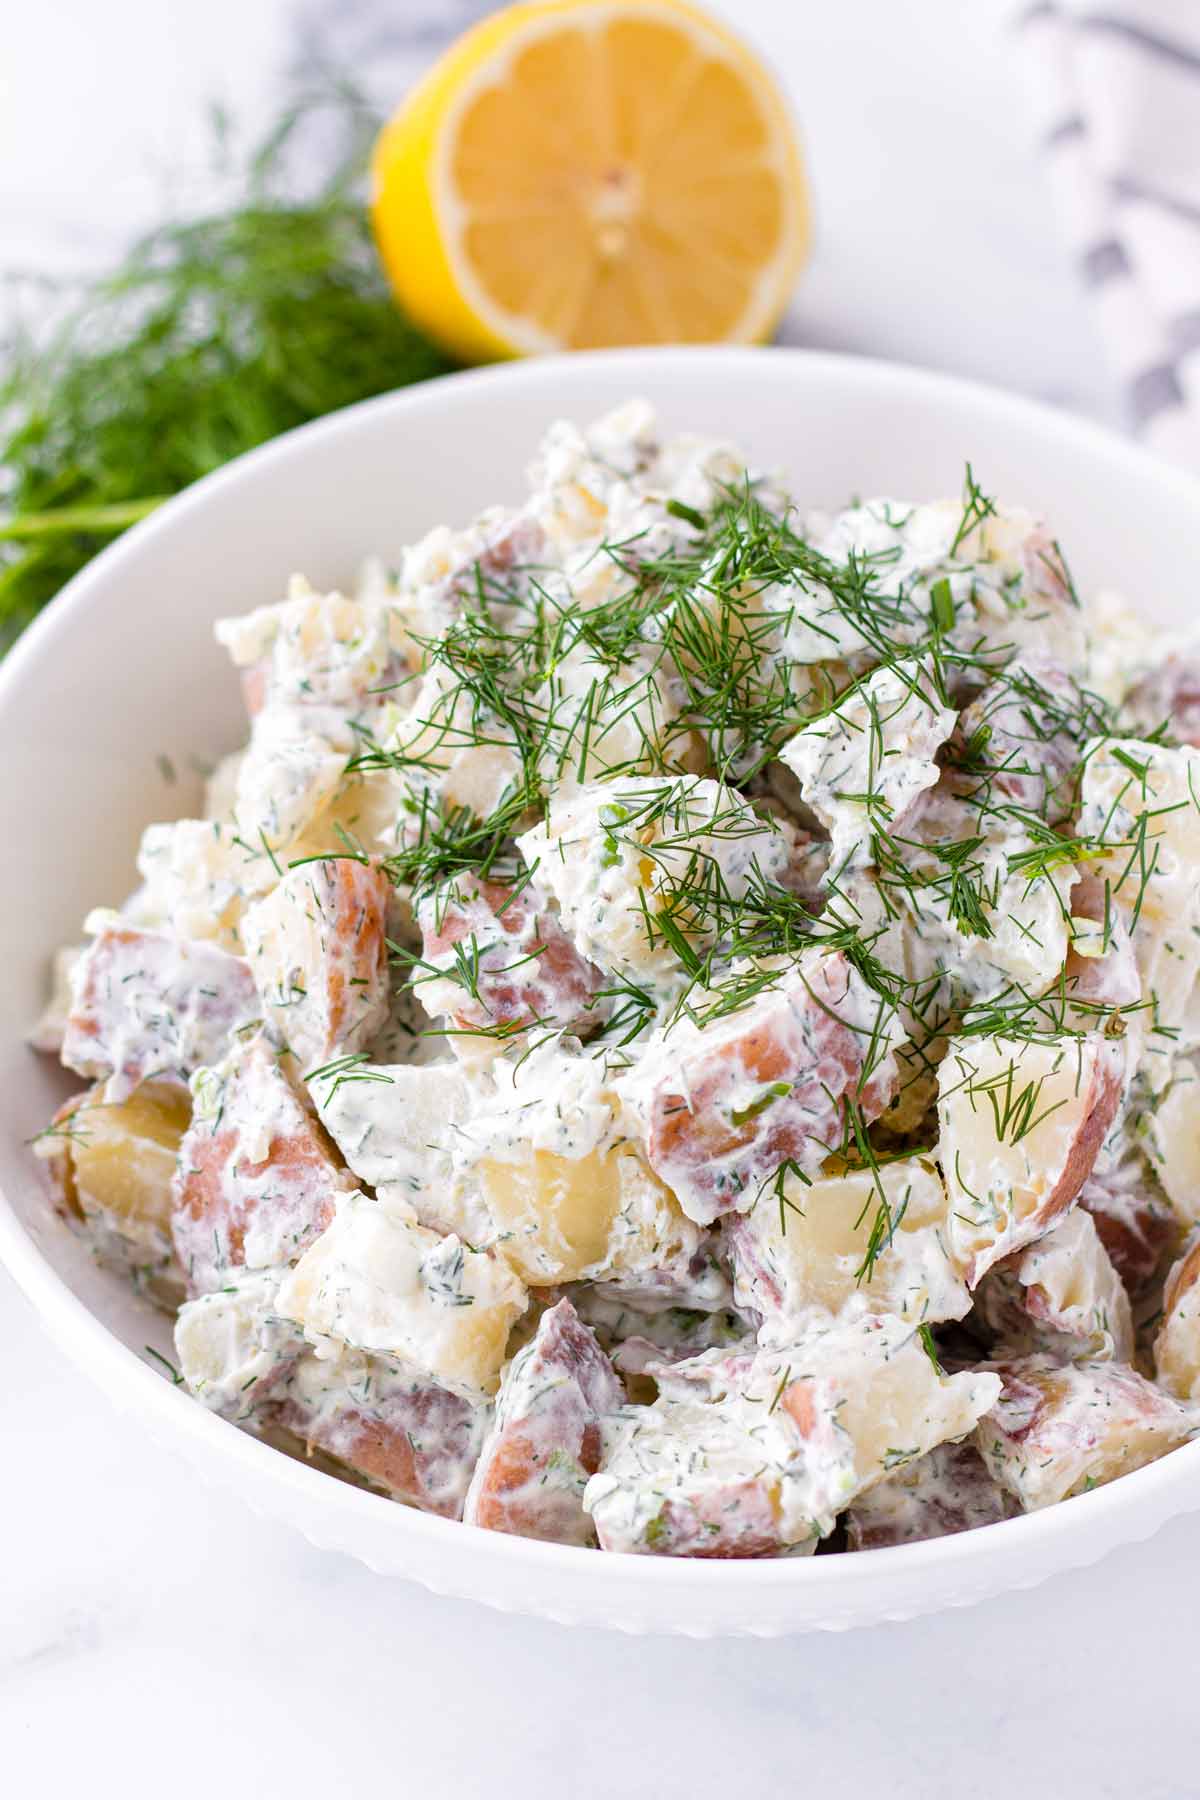 dill potato salad with fresh dill garnish on top